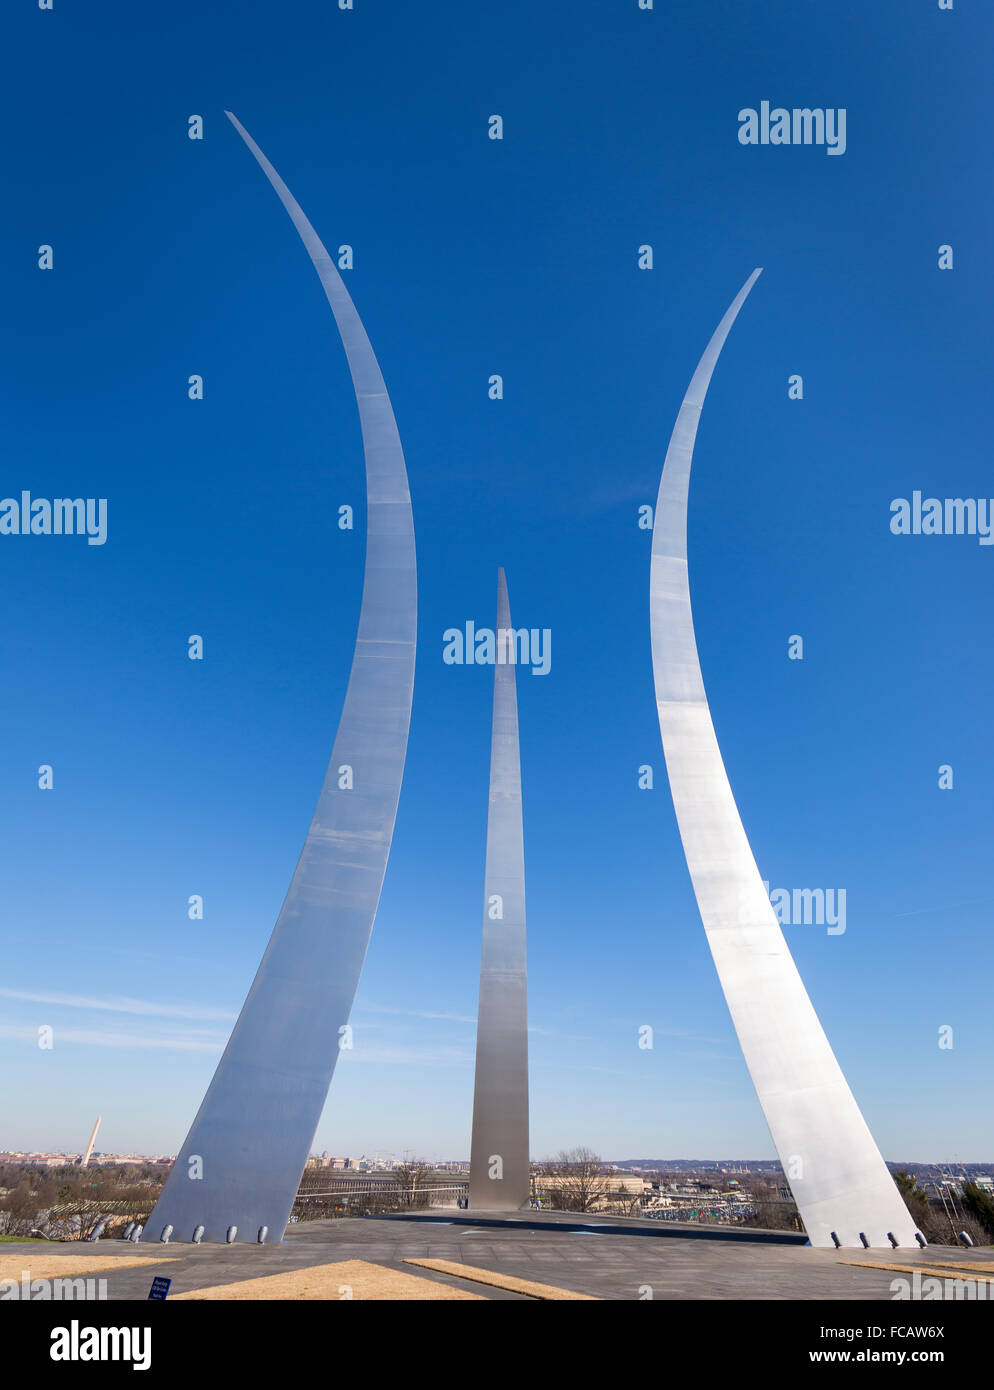 ARLINGTON, VIRGINIA, USA - Vereinigte Staaten Luftwaffe Denkmal. Stockfoto